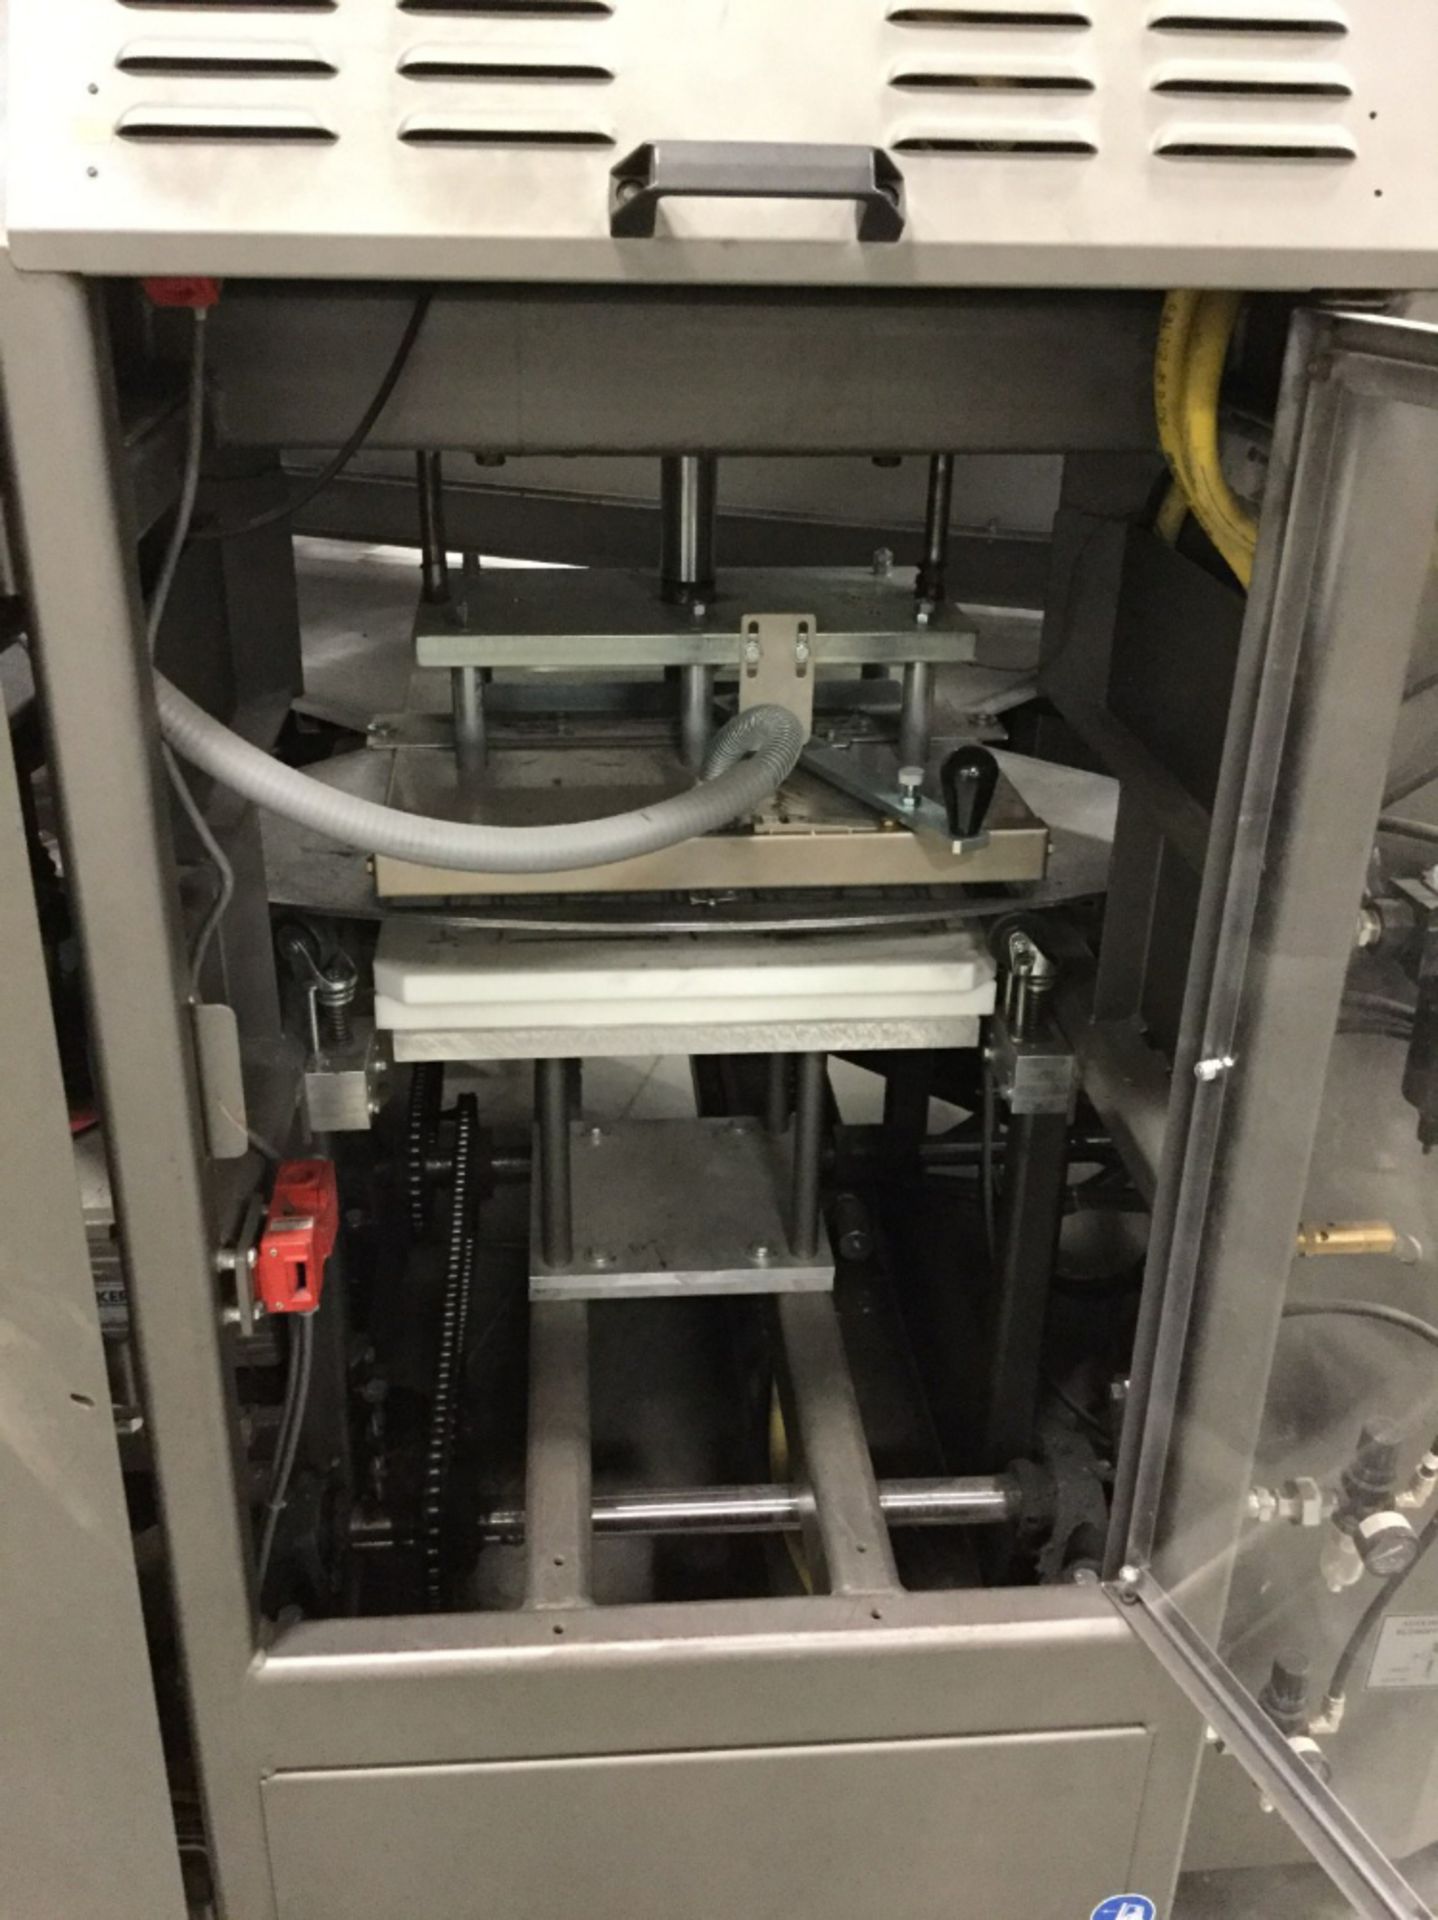 Alloyd Aergo 8 Heat Seal Automatic Rotary Sealing Machine - Image 4 of 7